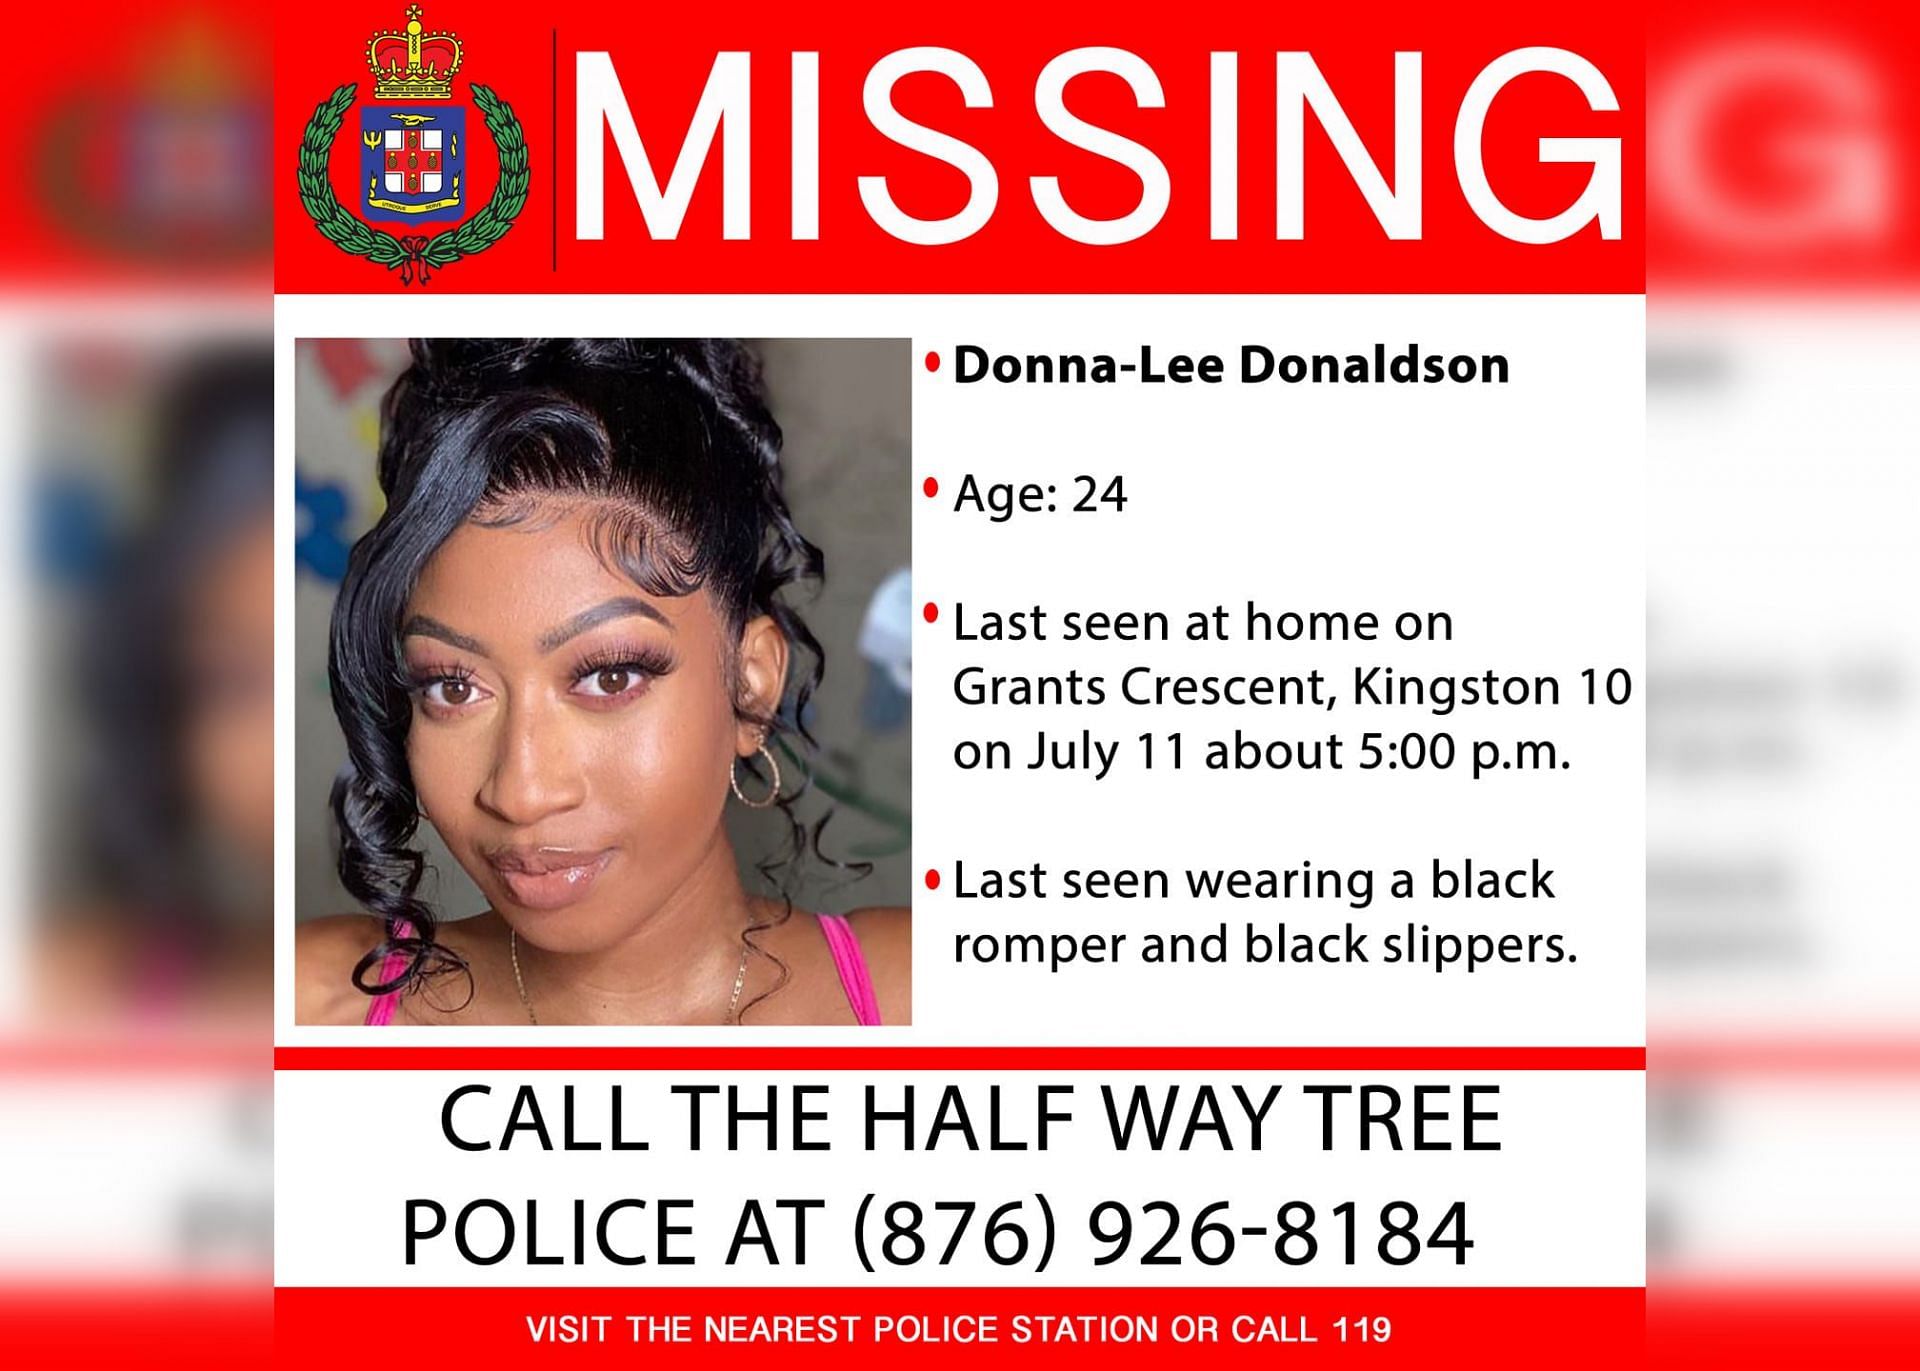 Donna-Lee Donaldson missing poster (Image via JamaicaConstabularyForce/Facebook)